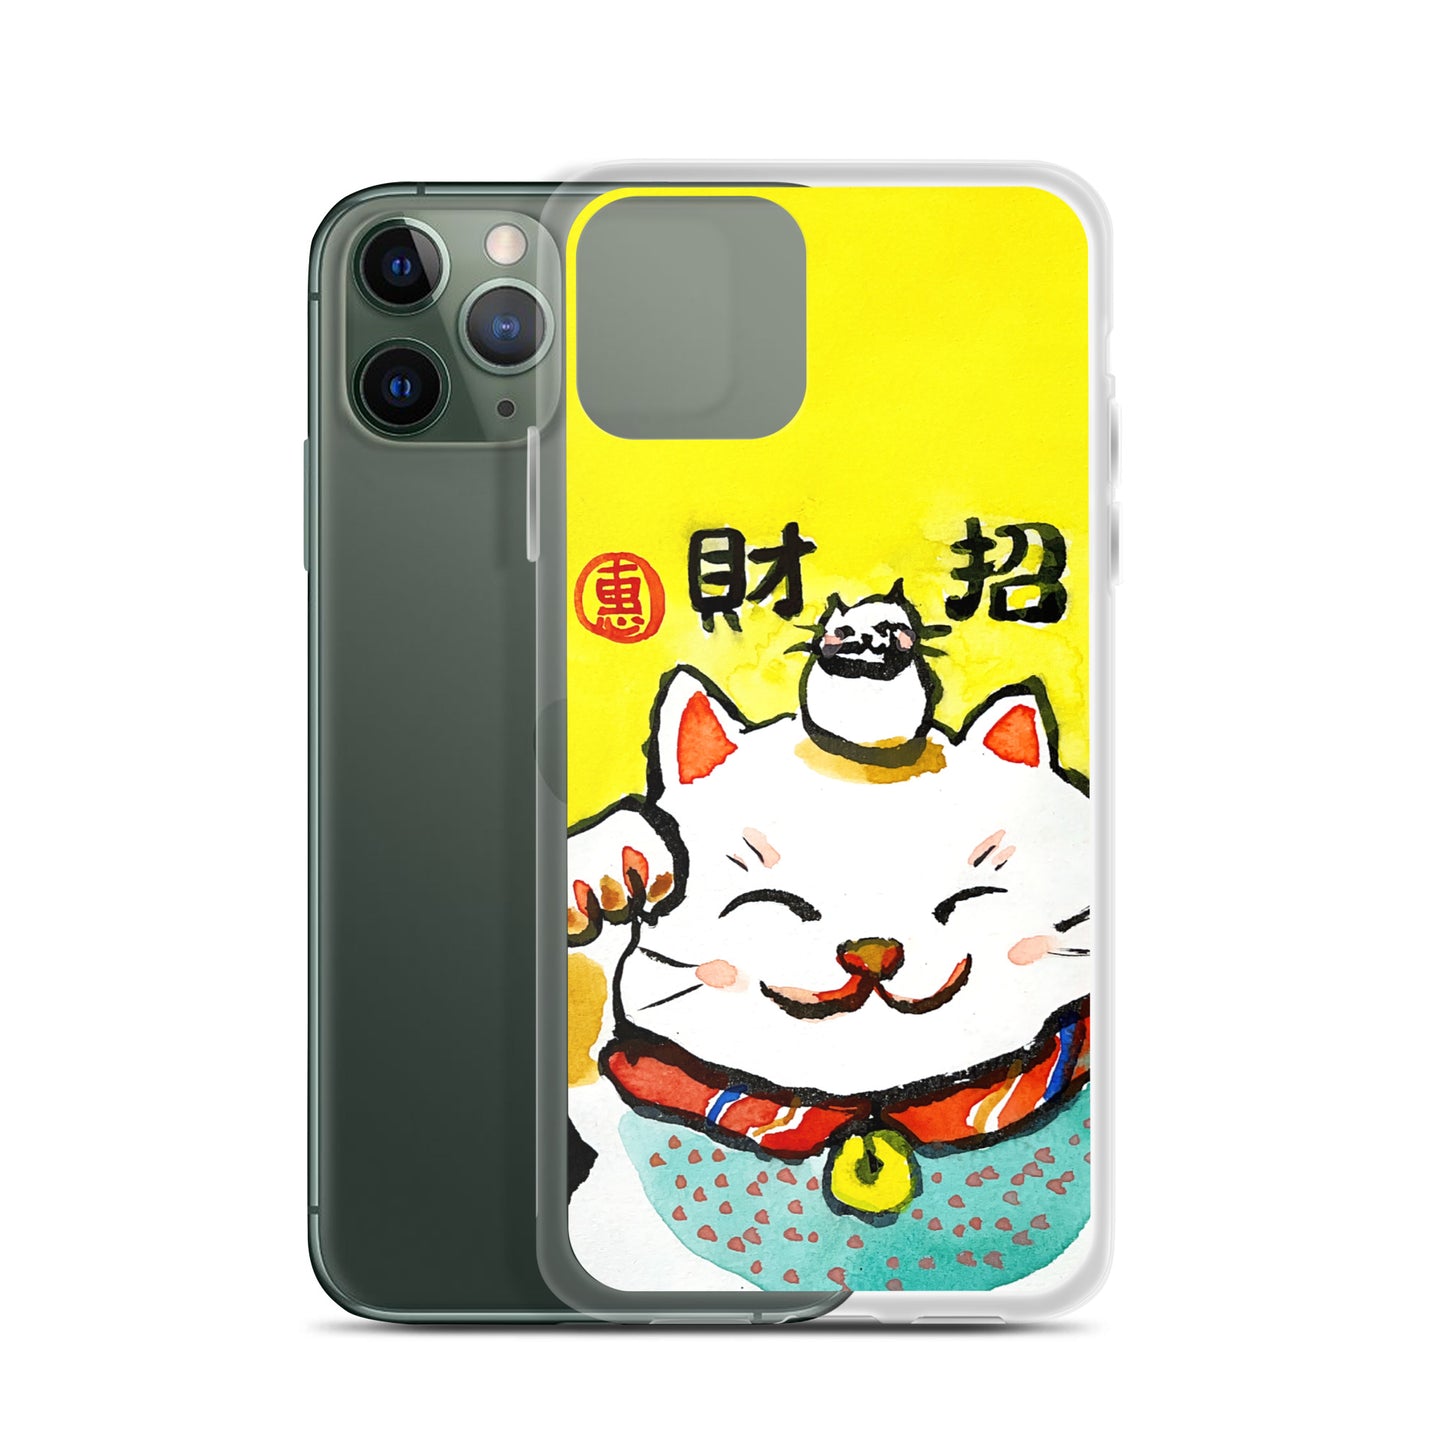 Lucky Cat 招財貓 iPhone Case